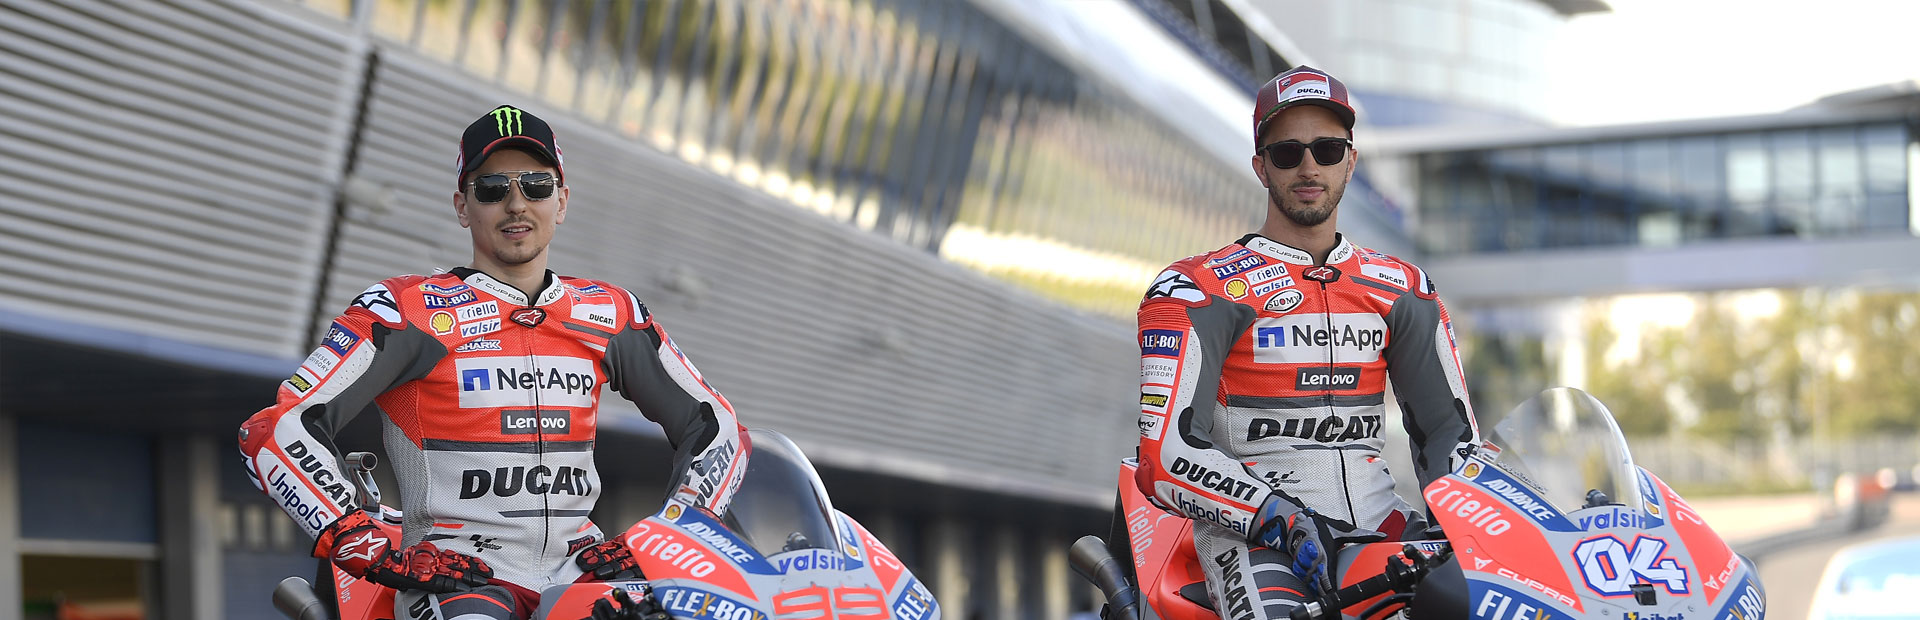 CUPRA sponsorem Ducati na mistrzostwach świata MotoGP